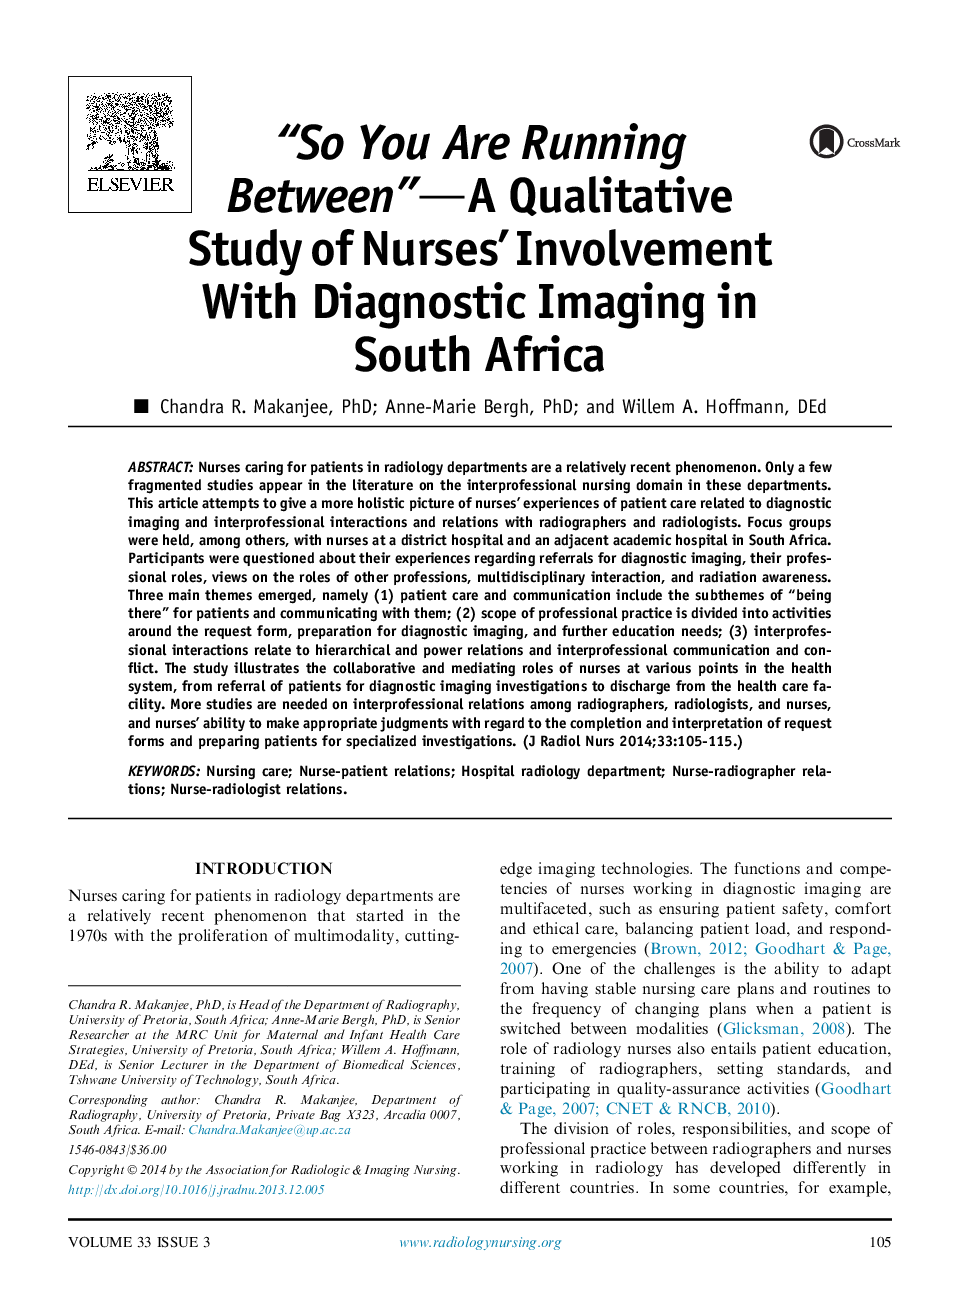 "So You Are Running Between" - مطالعه کیفی از مشارکت پرستاران با تصویربرداری تشخیصی در آفریقای جنوبی